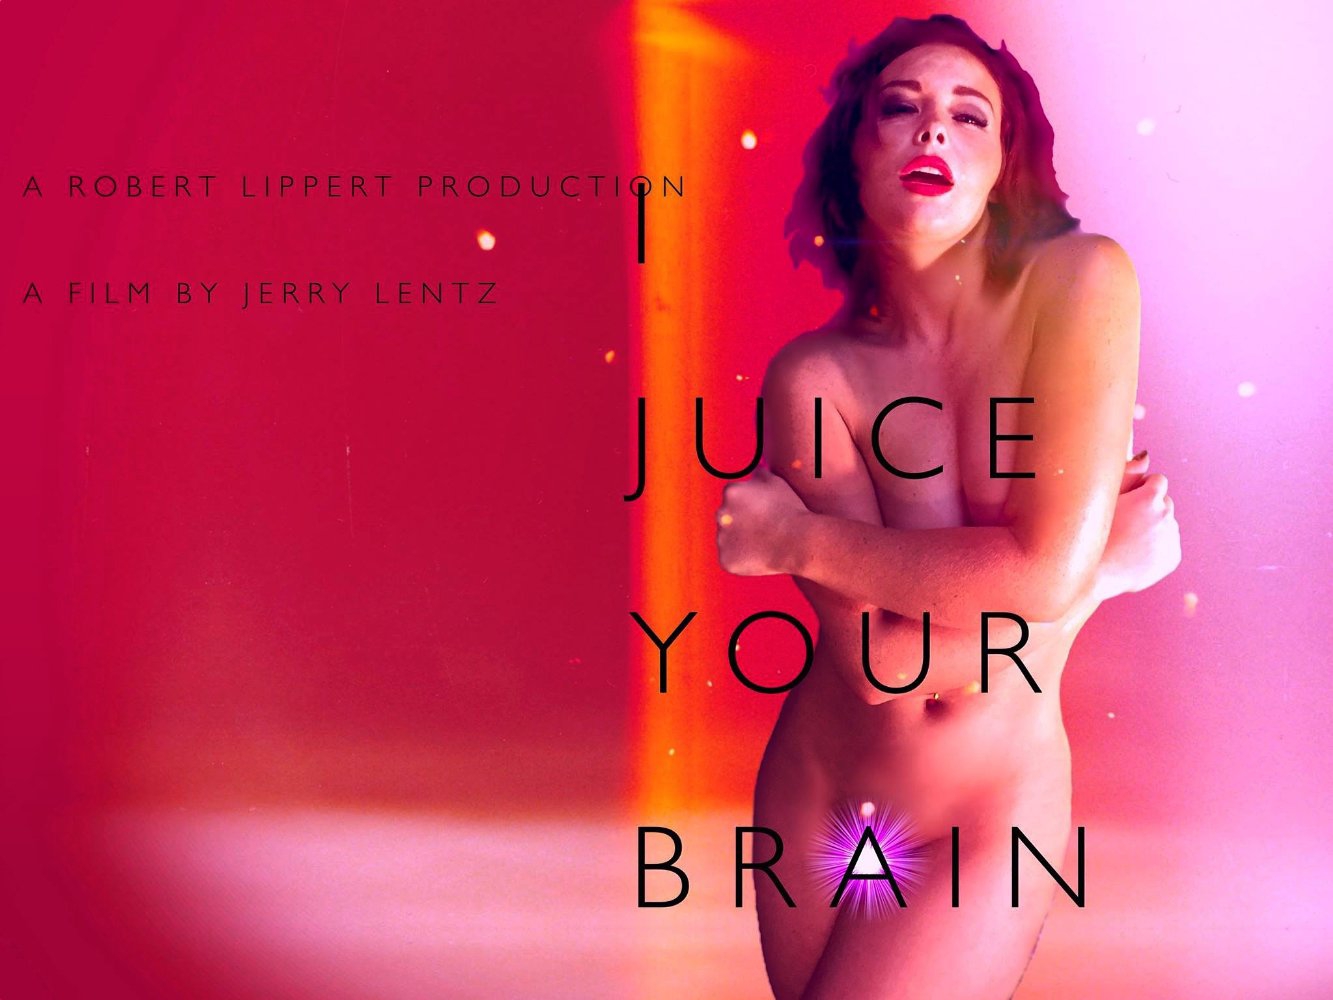  I Juice Your Brain (2017)